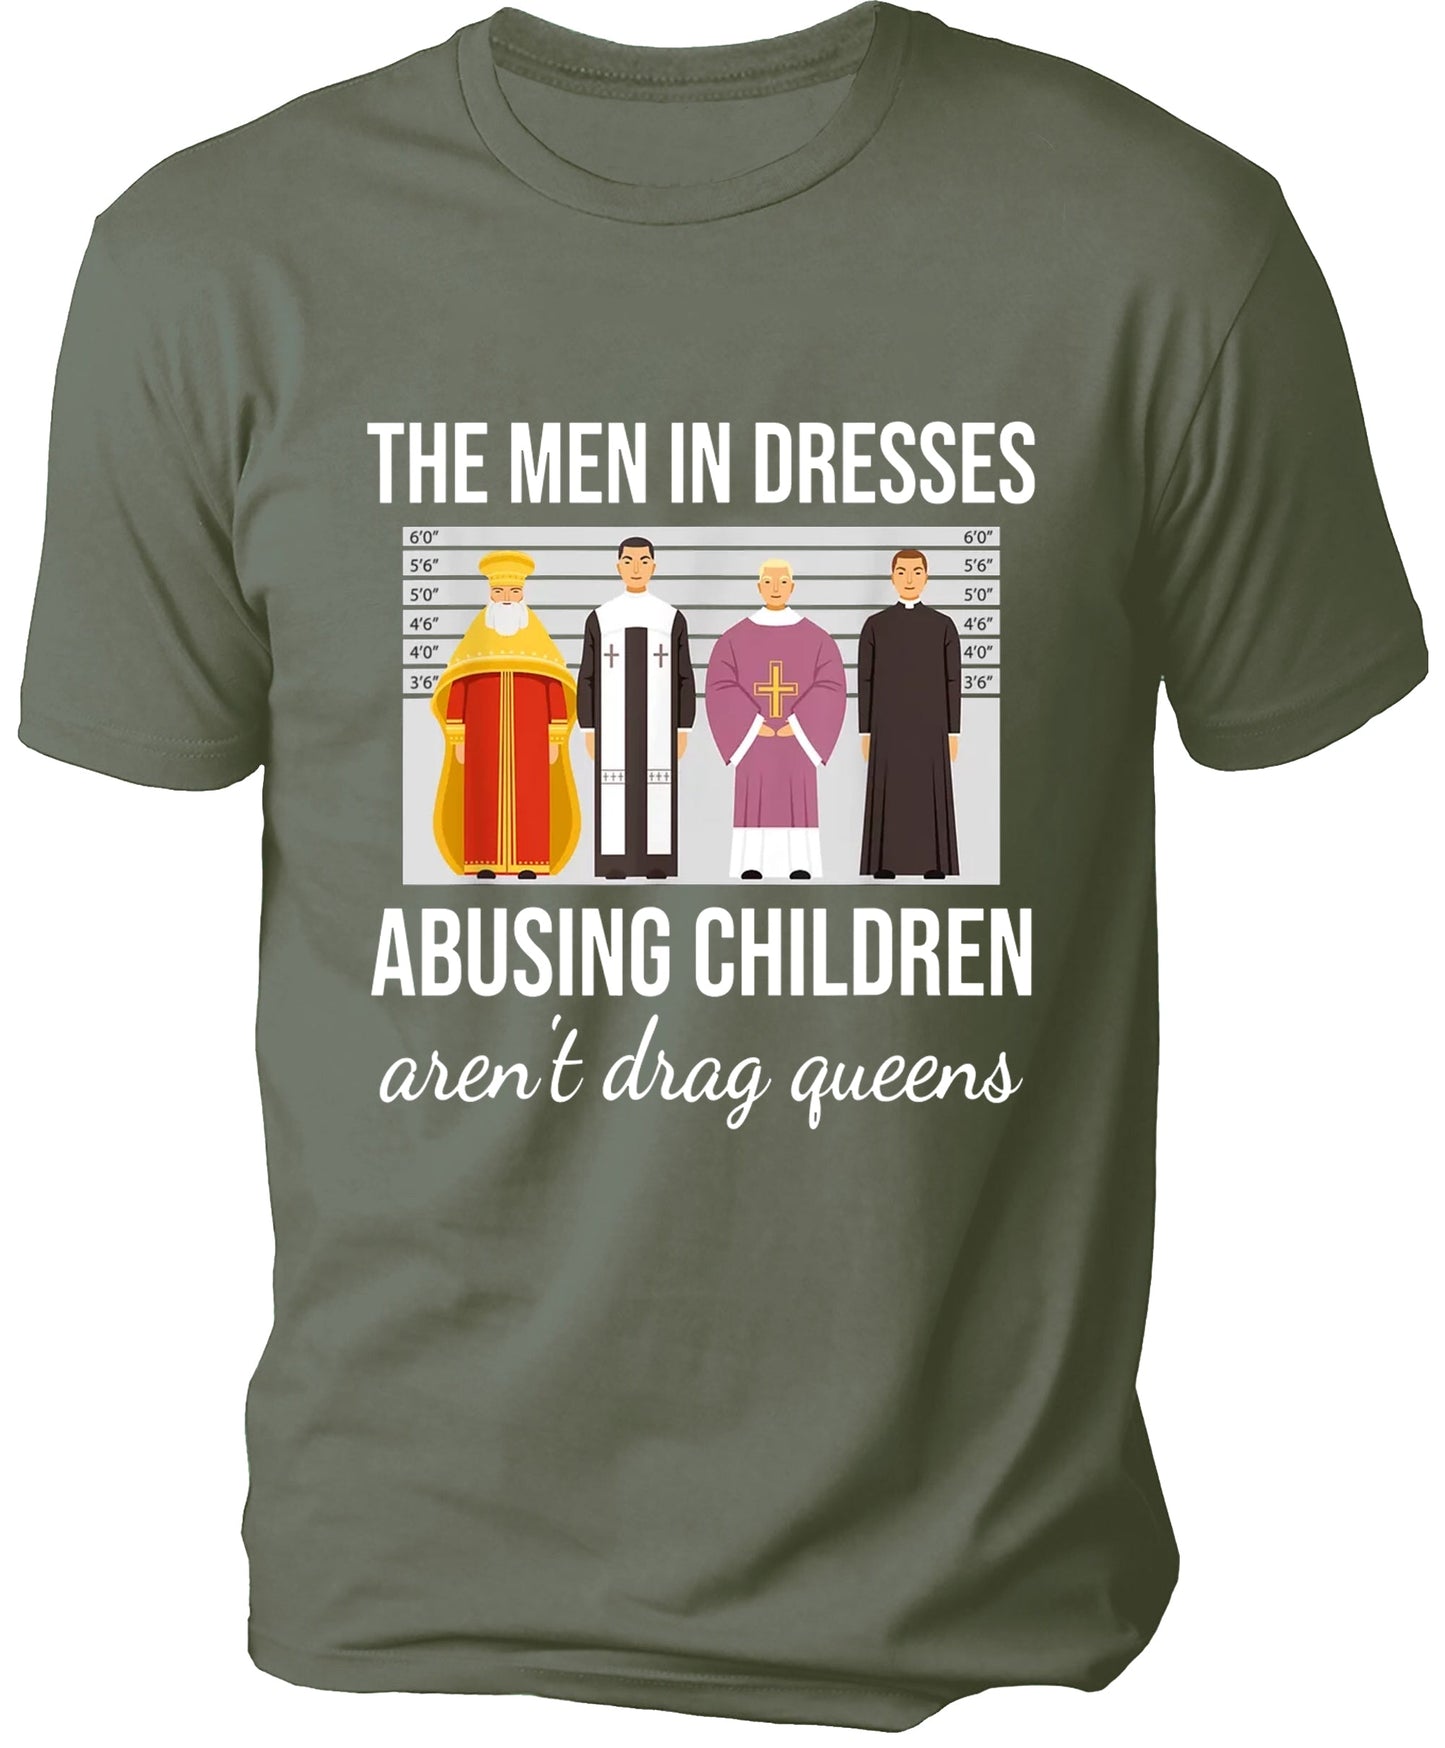 THE MEN IN DRESSES Men's T-shirt